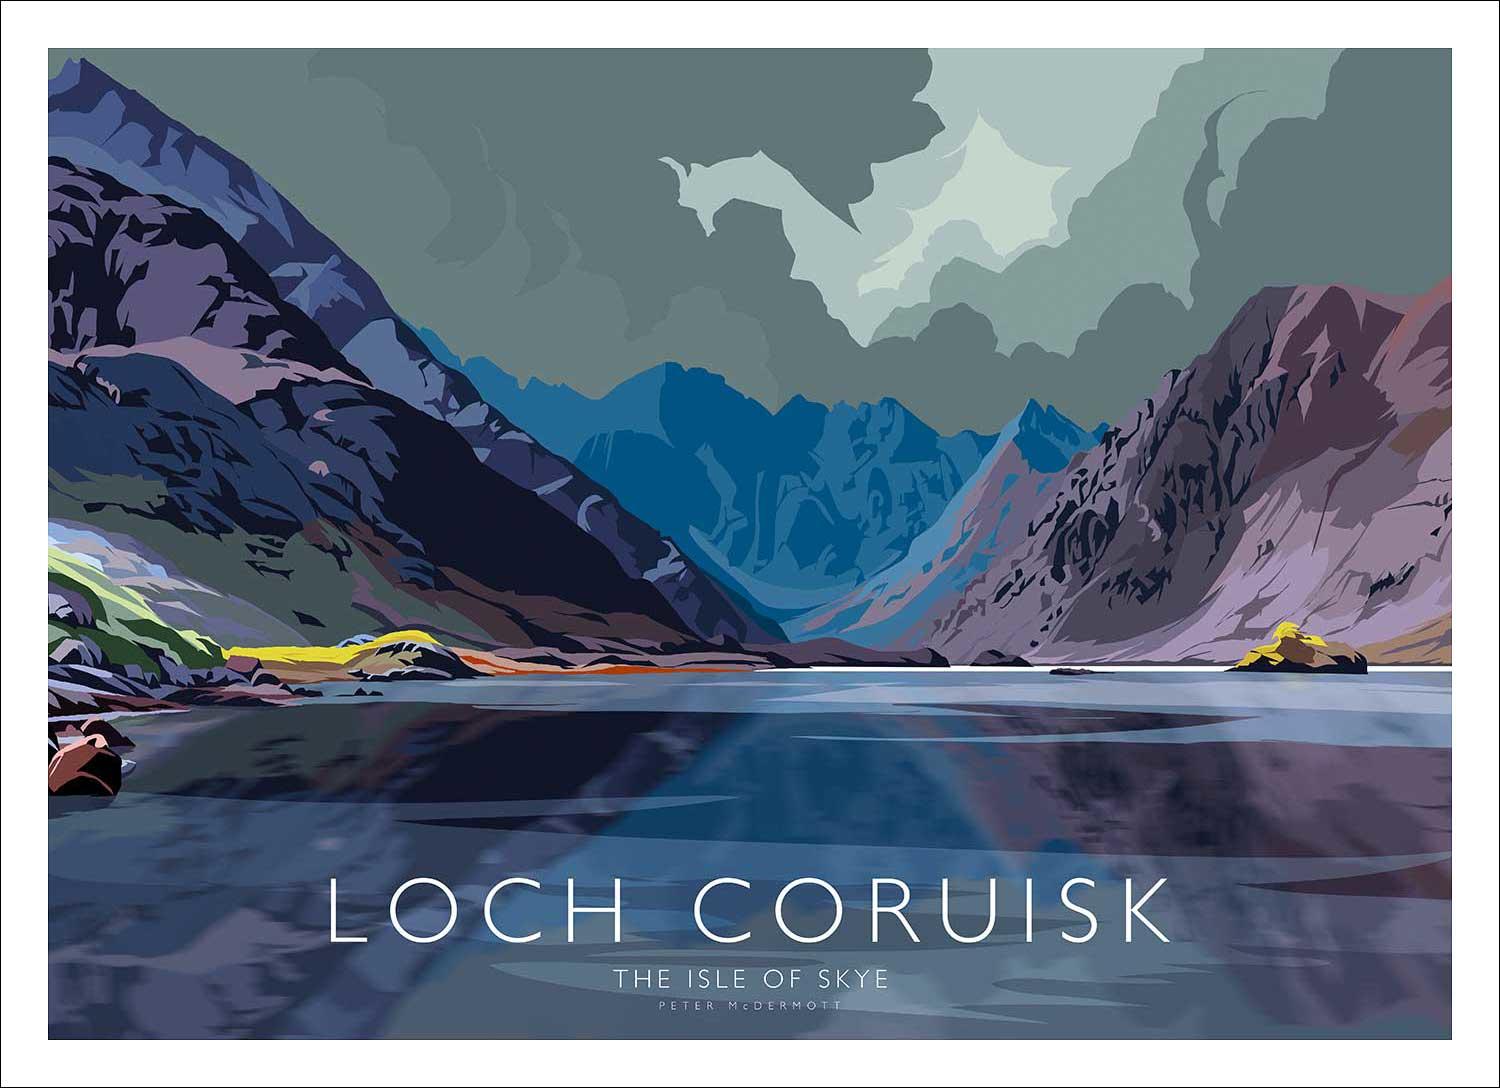 Loch Coruisk Art Print from an original illustration by artist Peter McDermott